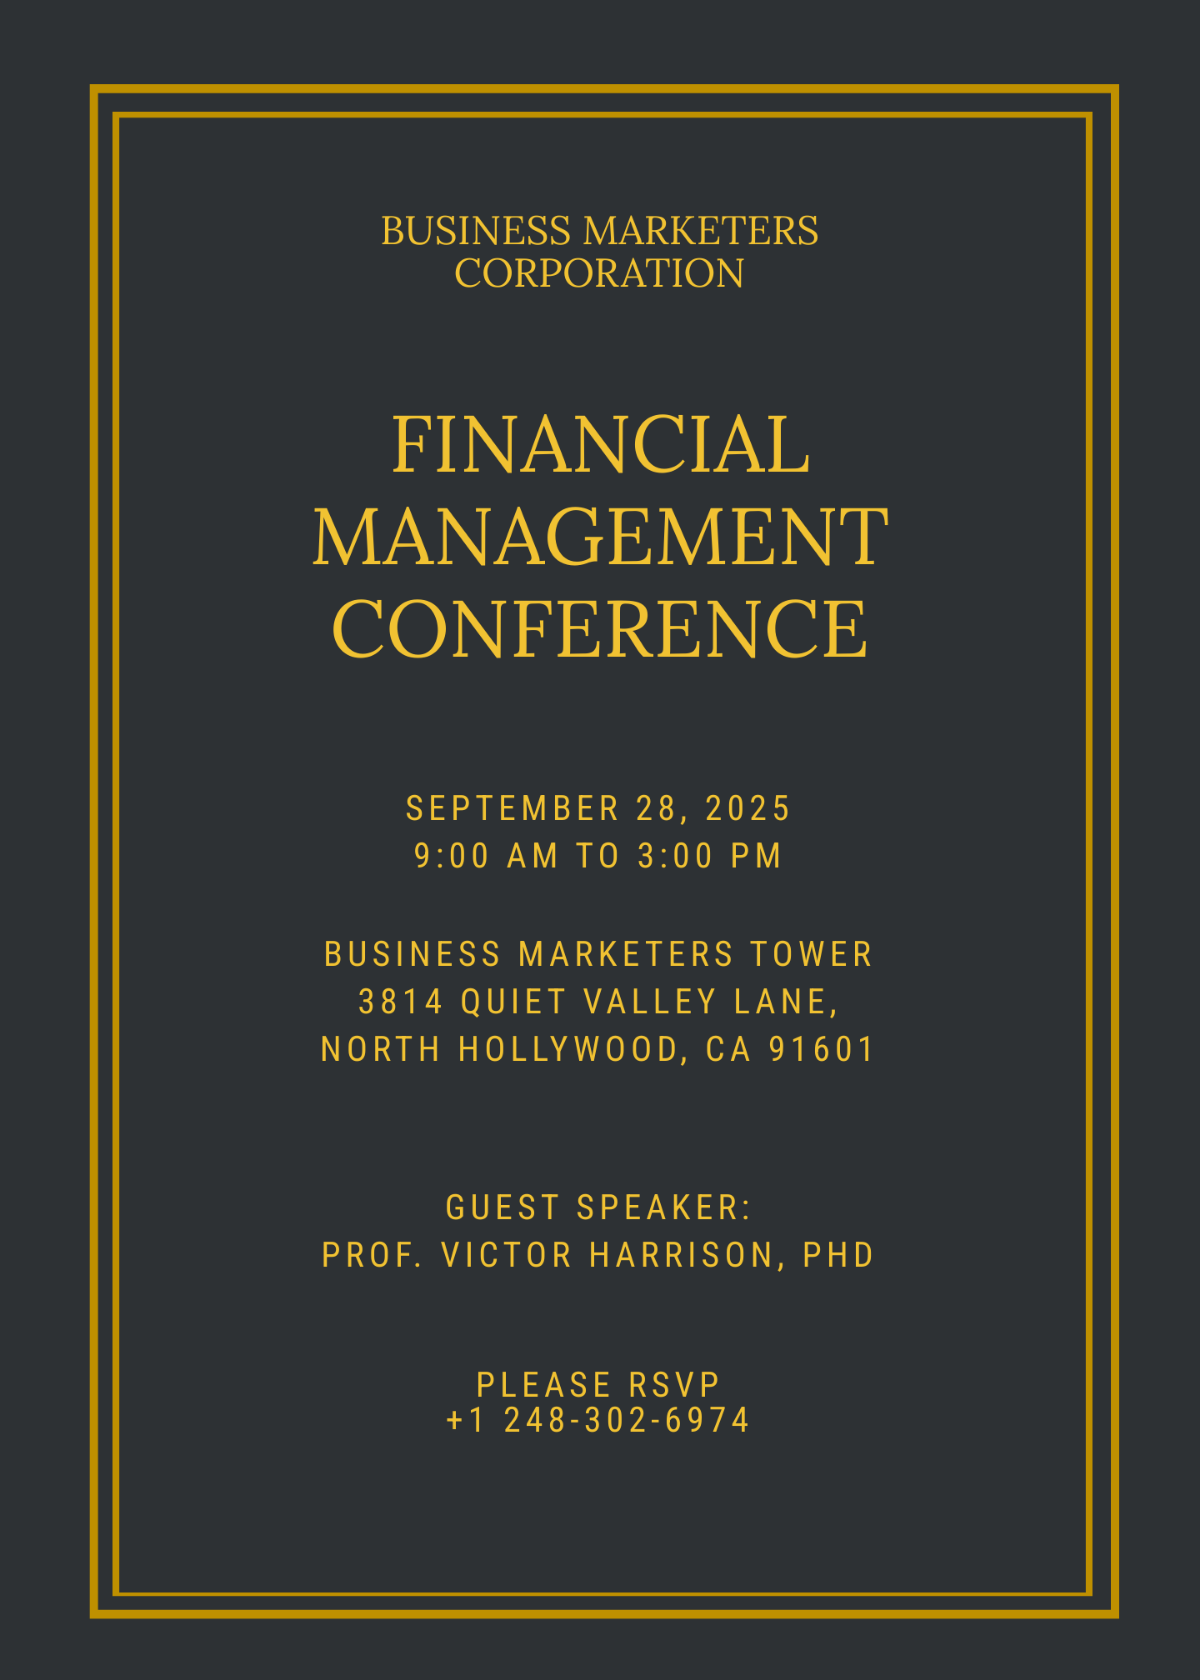 Financial Seminar Invitation Template